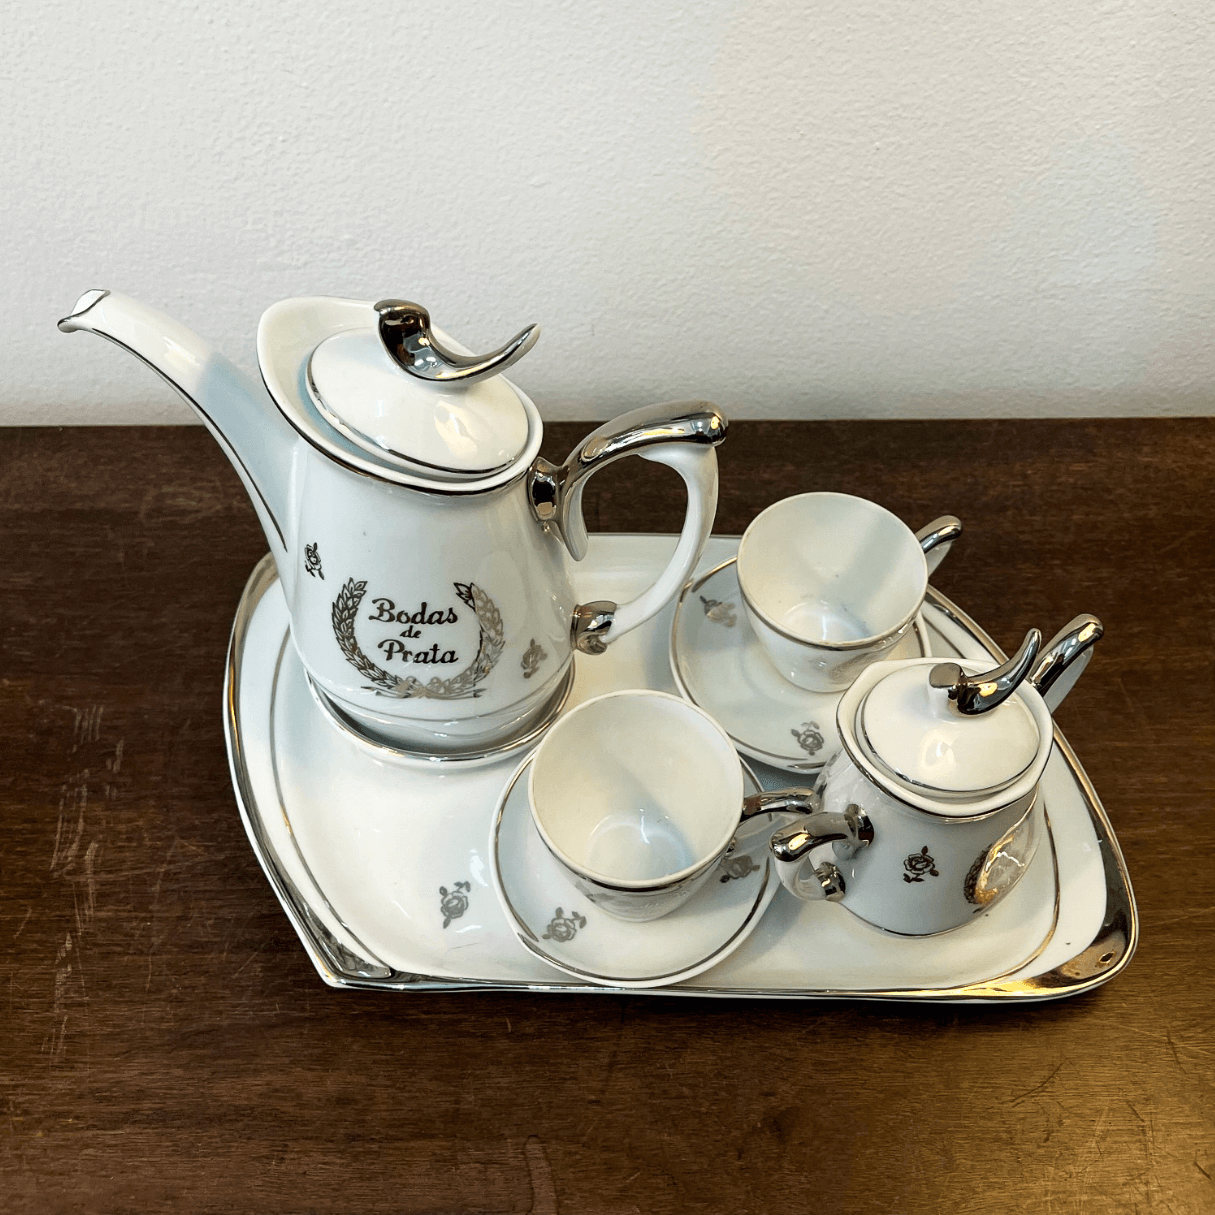 Conjunto de Café Antigo Schmidt Modelo Bodas de Prata